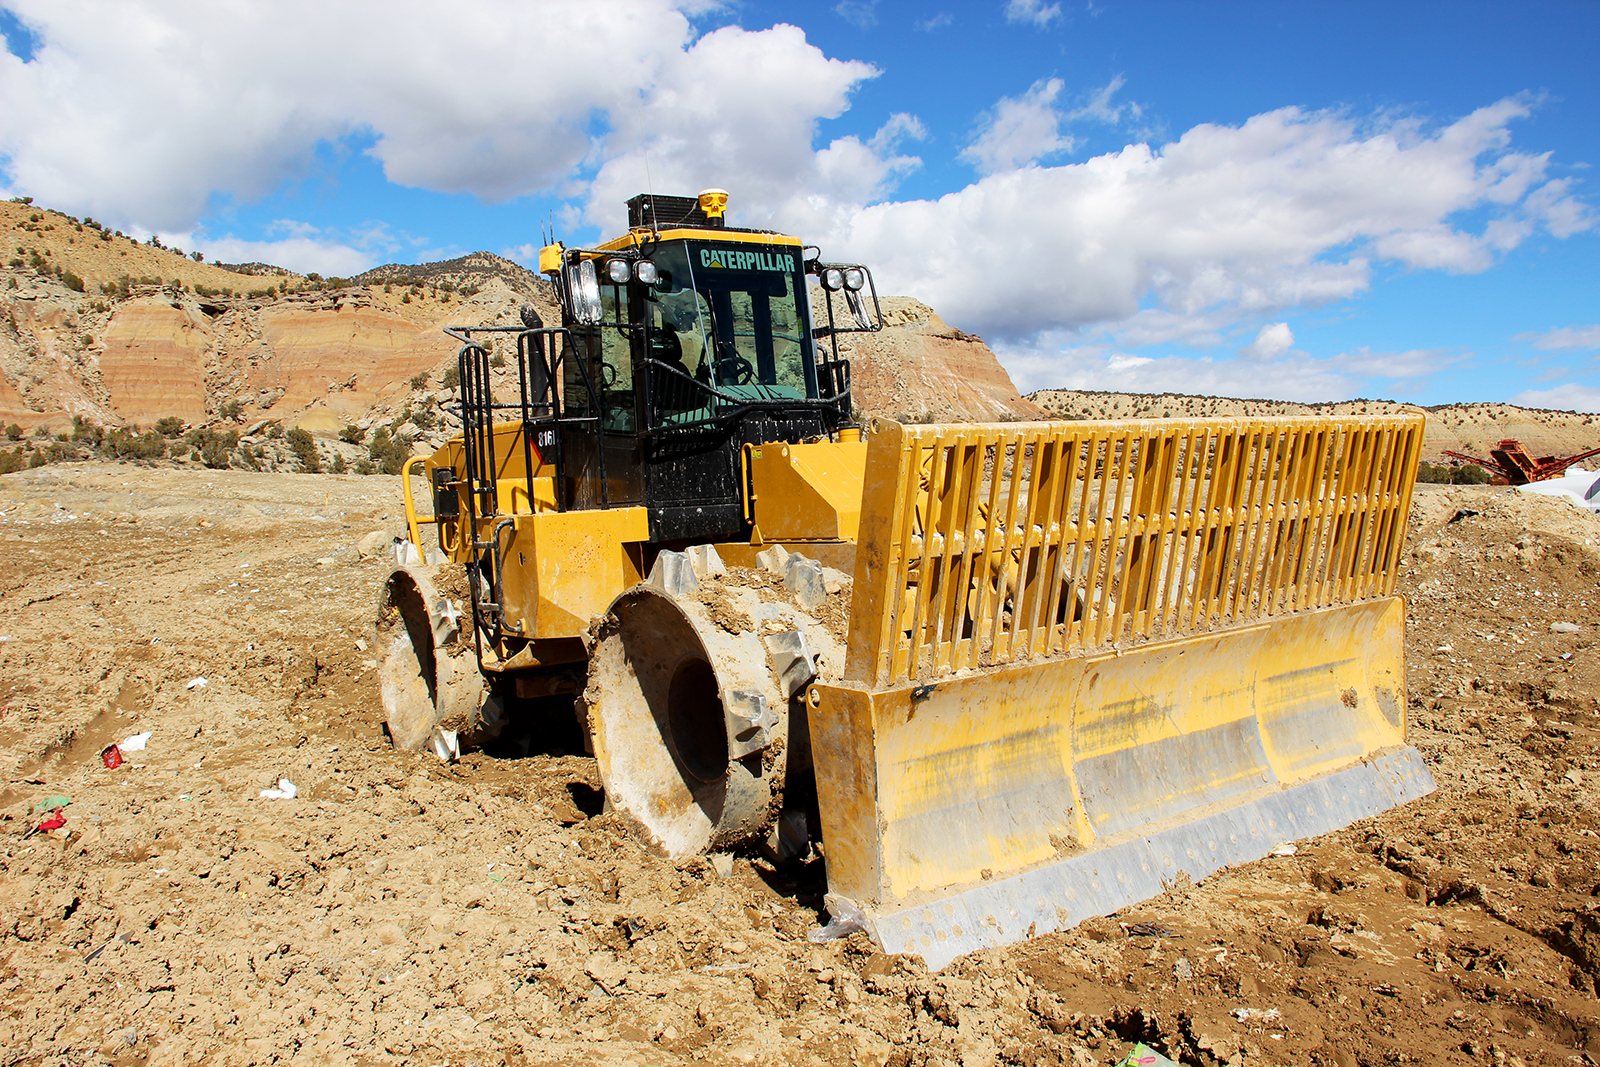 A bulldozer is seen at the Garfield County Landfill near Rifle, Colorado.